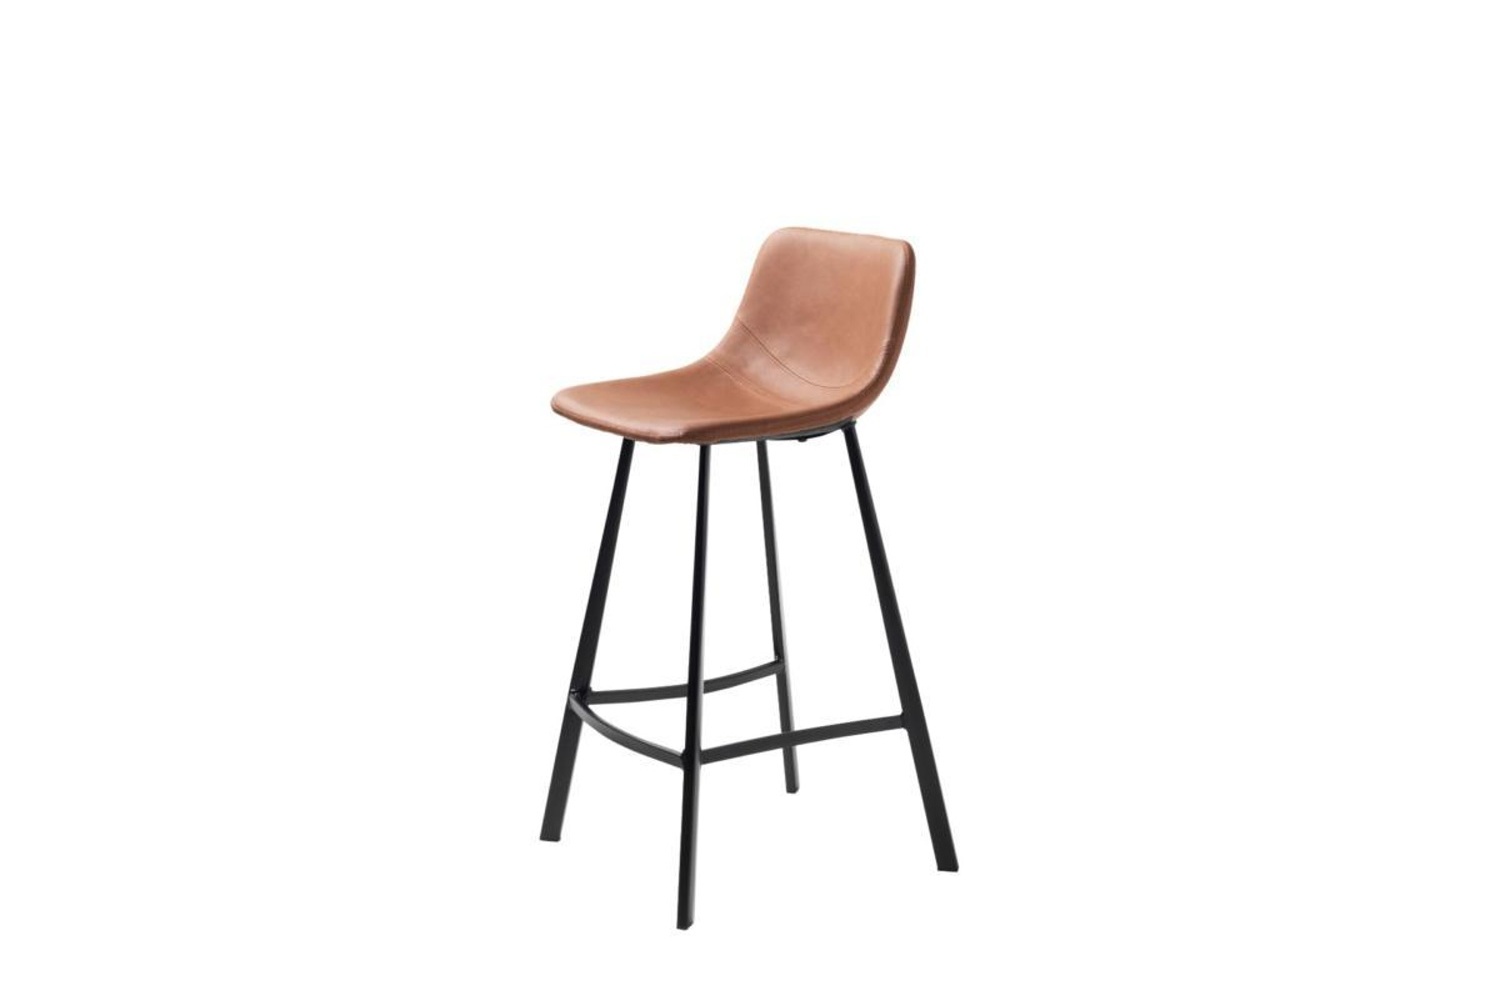 Furniria Designová barová židle Claudia světlehnědá